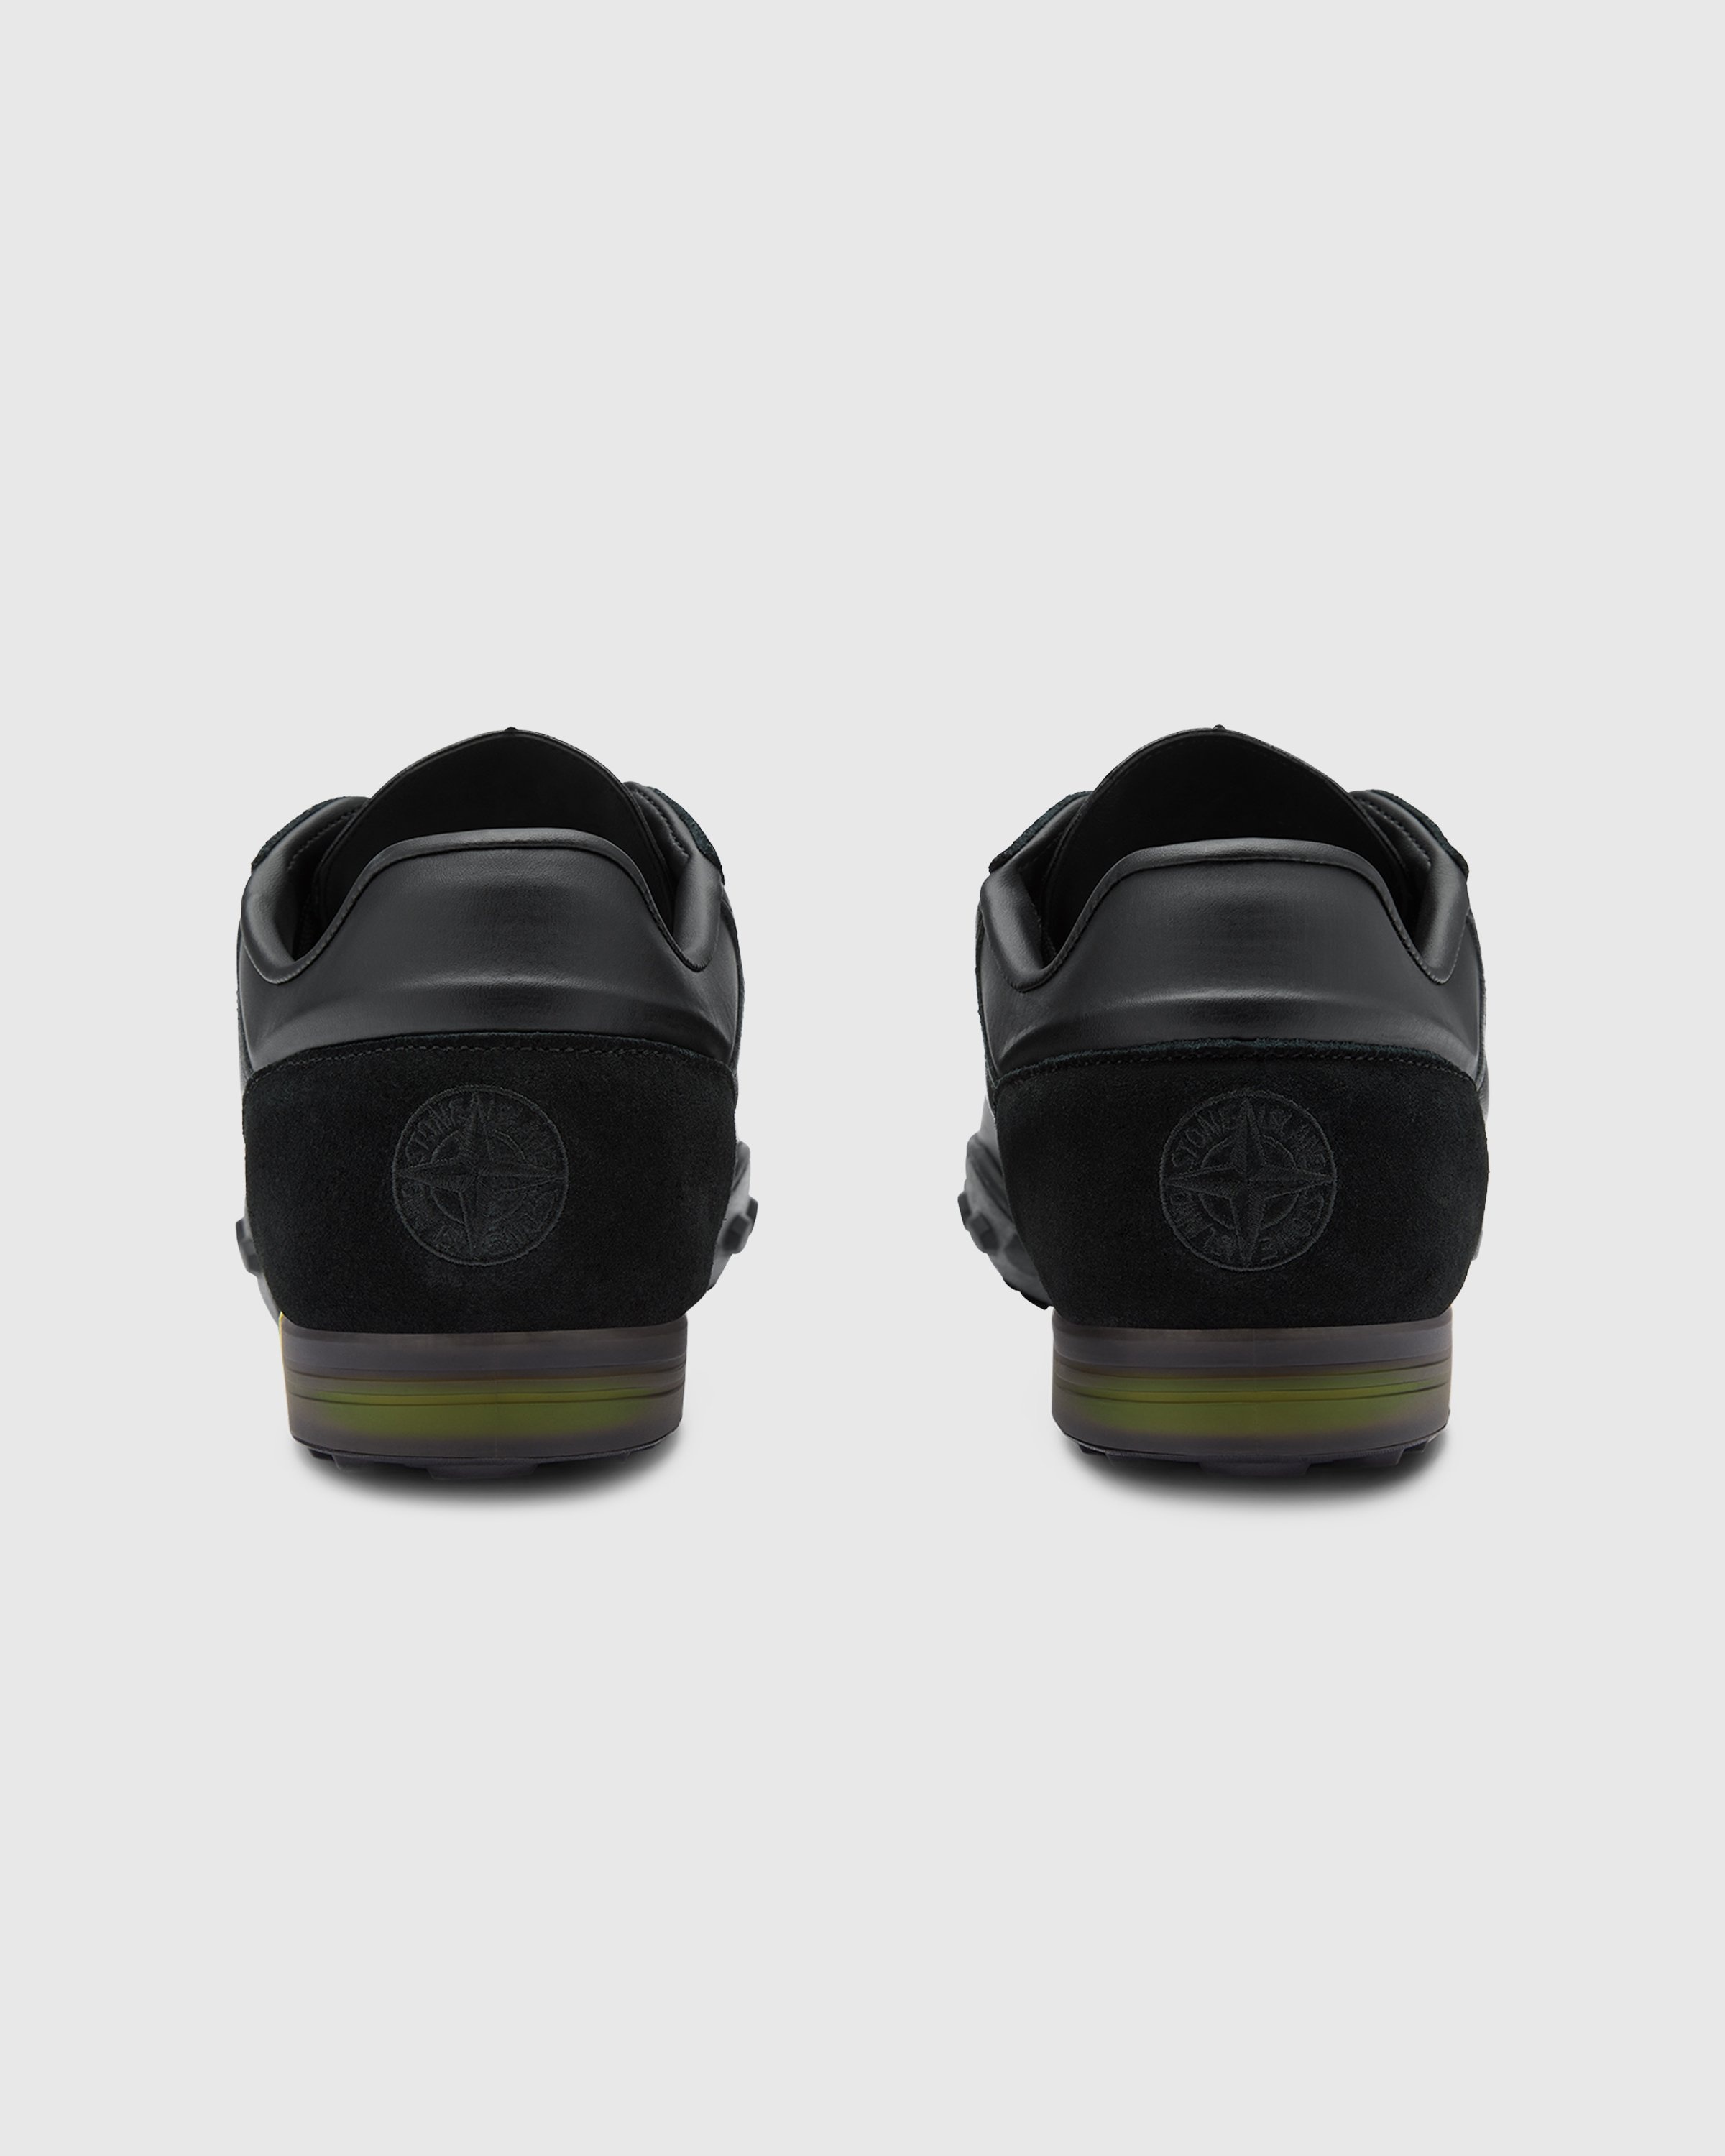 Stone Island – Football Black 78FWS022 - Sneakers - Black - Image 3